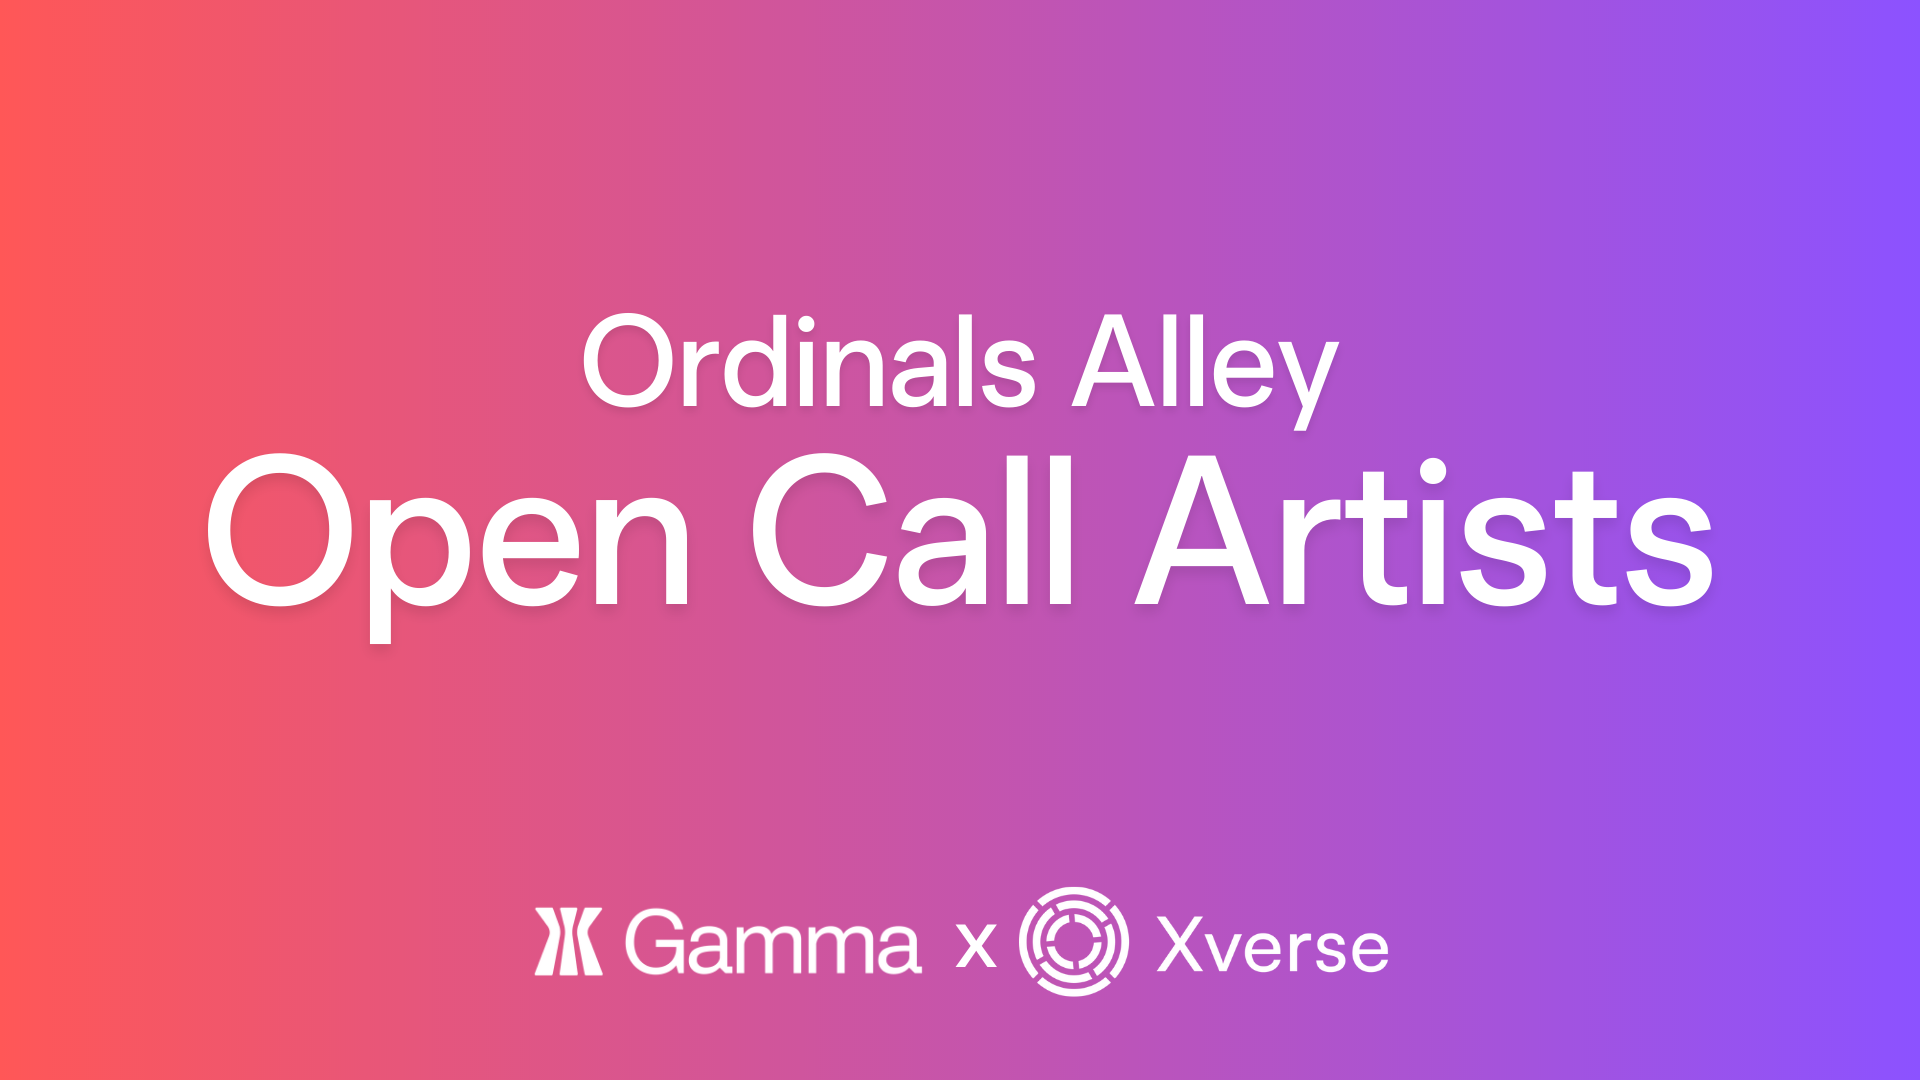 Ordinals Alley Open Call Artists